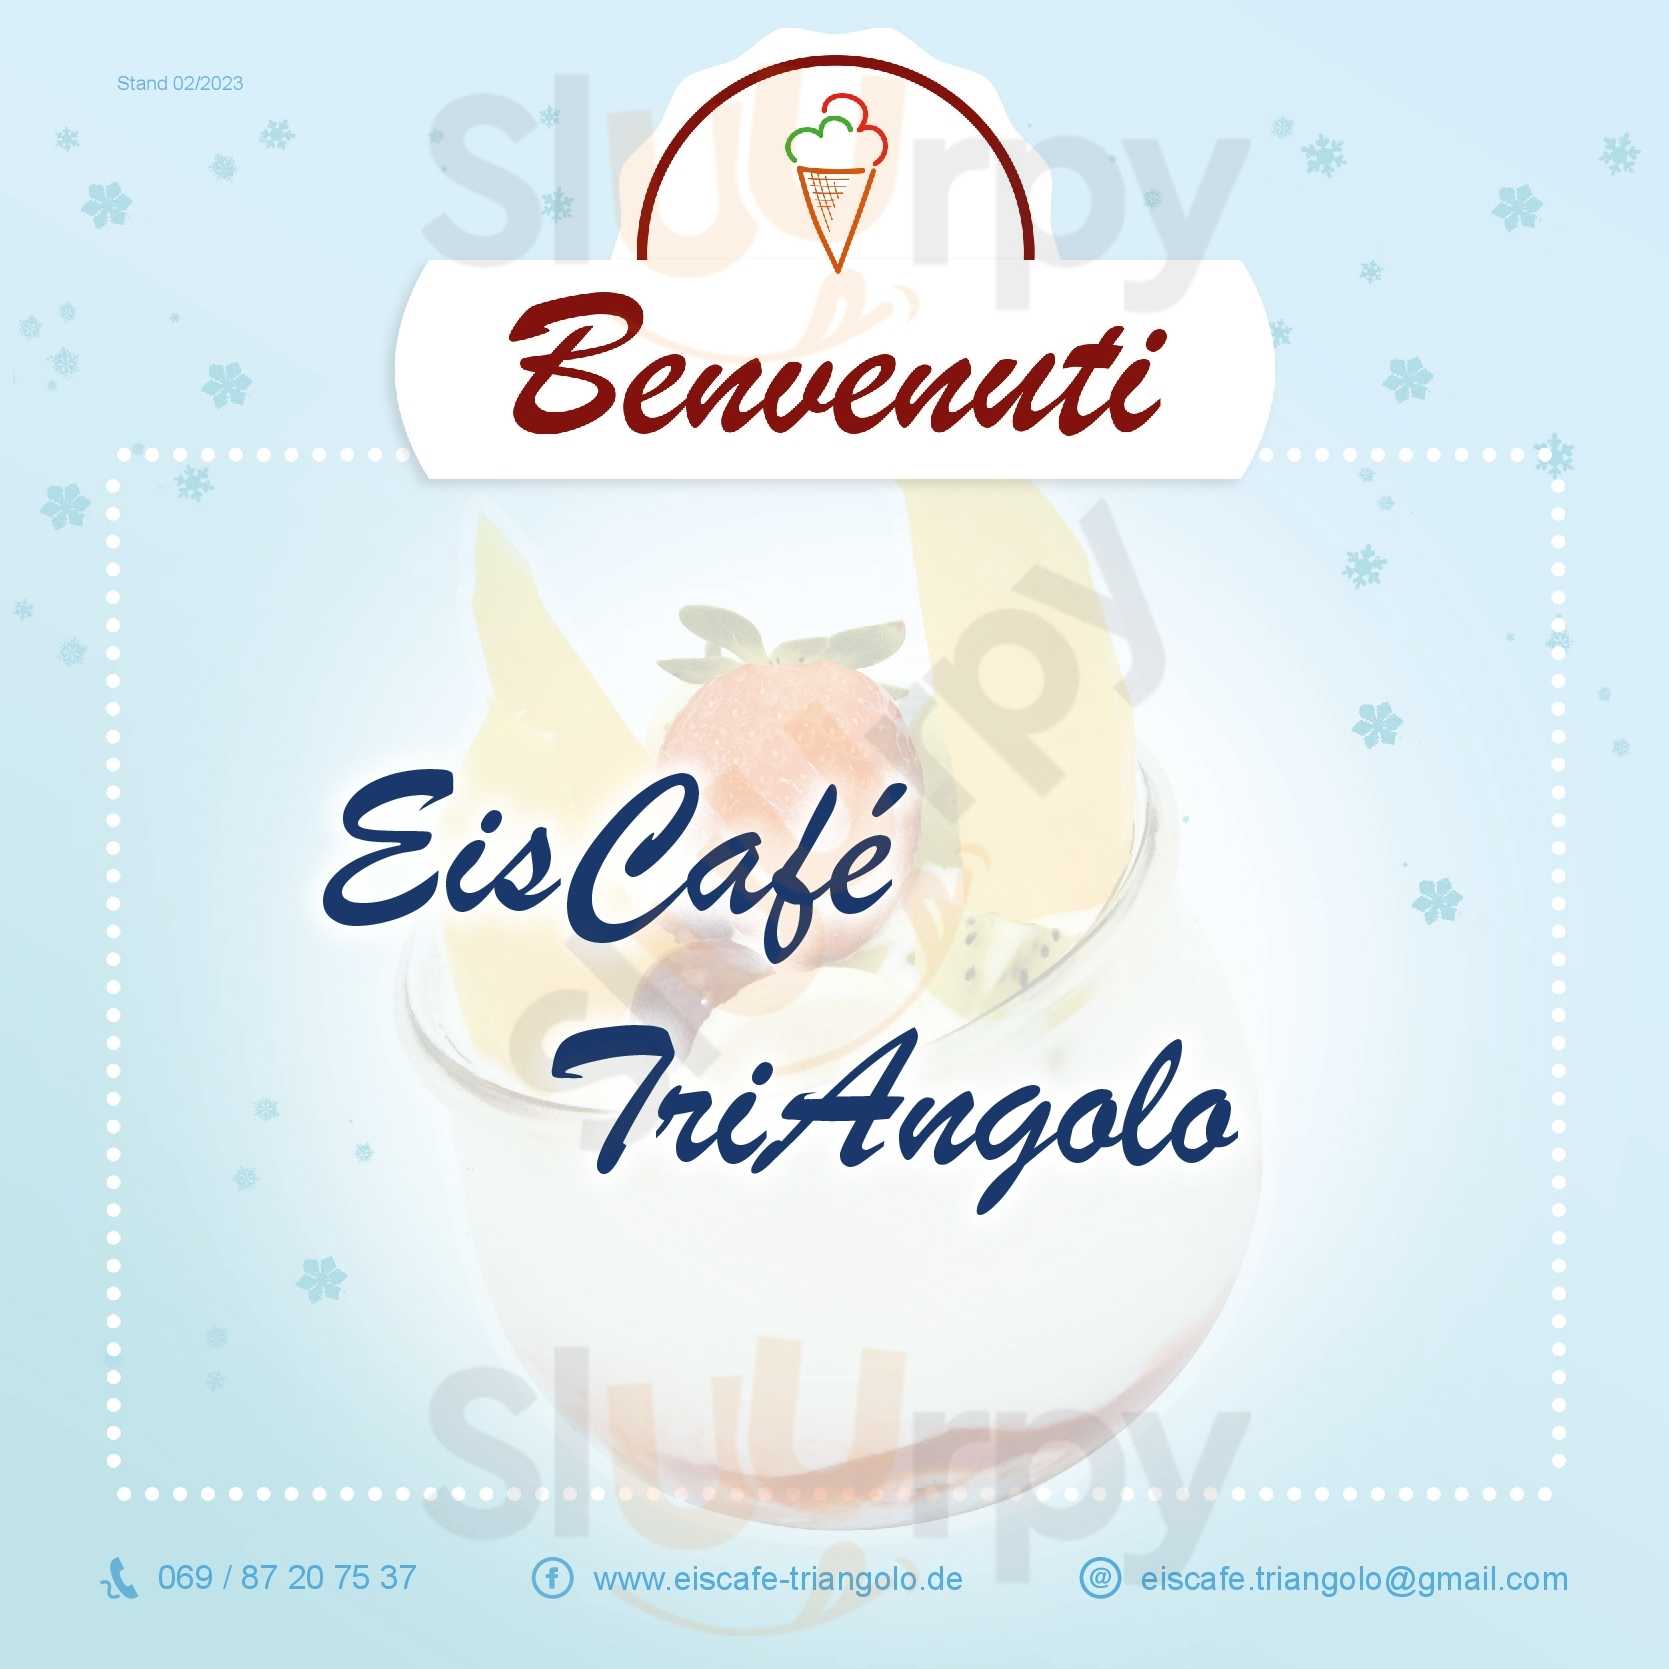 Eiscafé Triangolo Offenbach Menu - 1